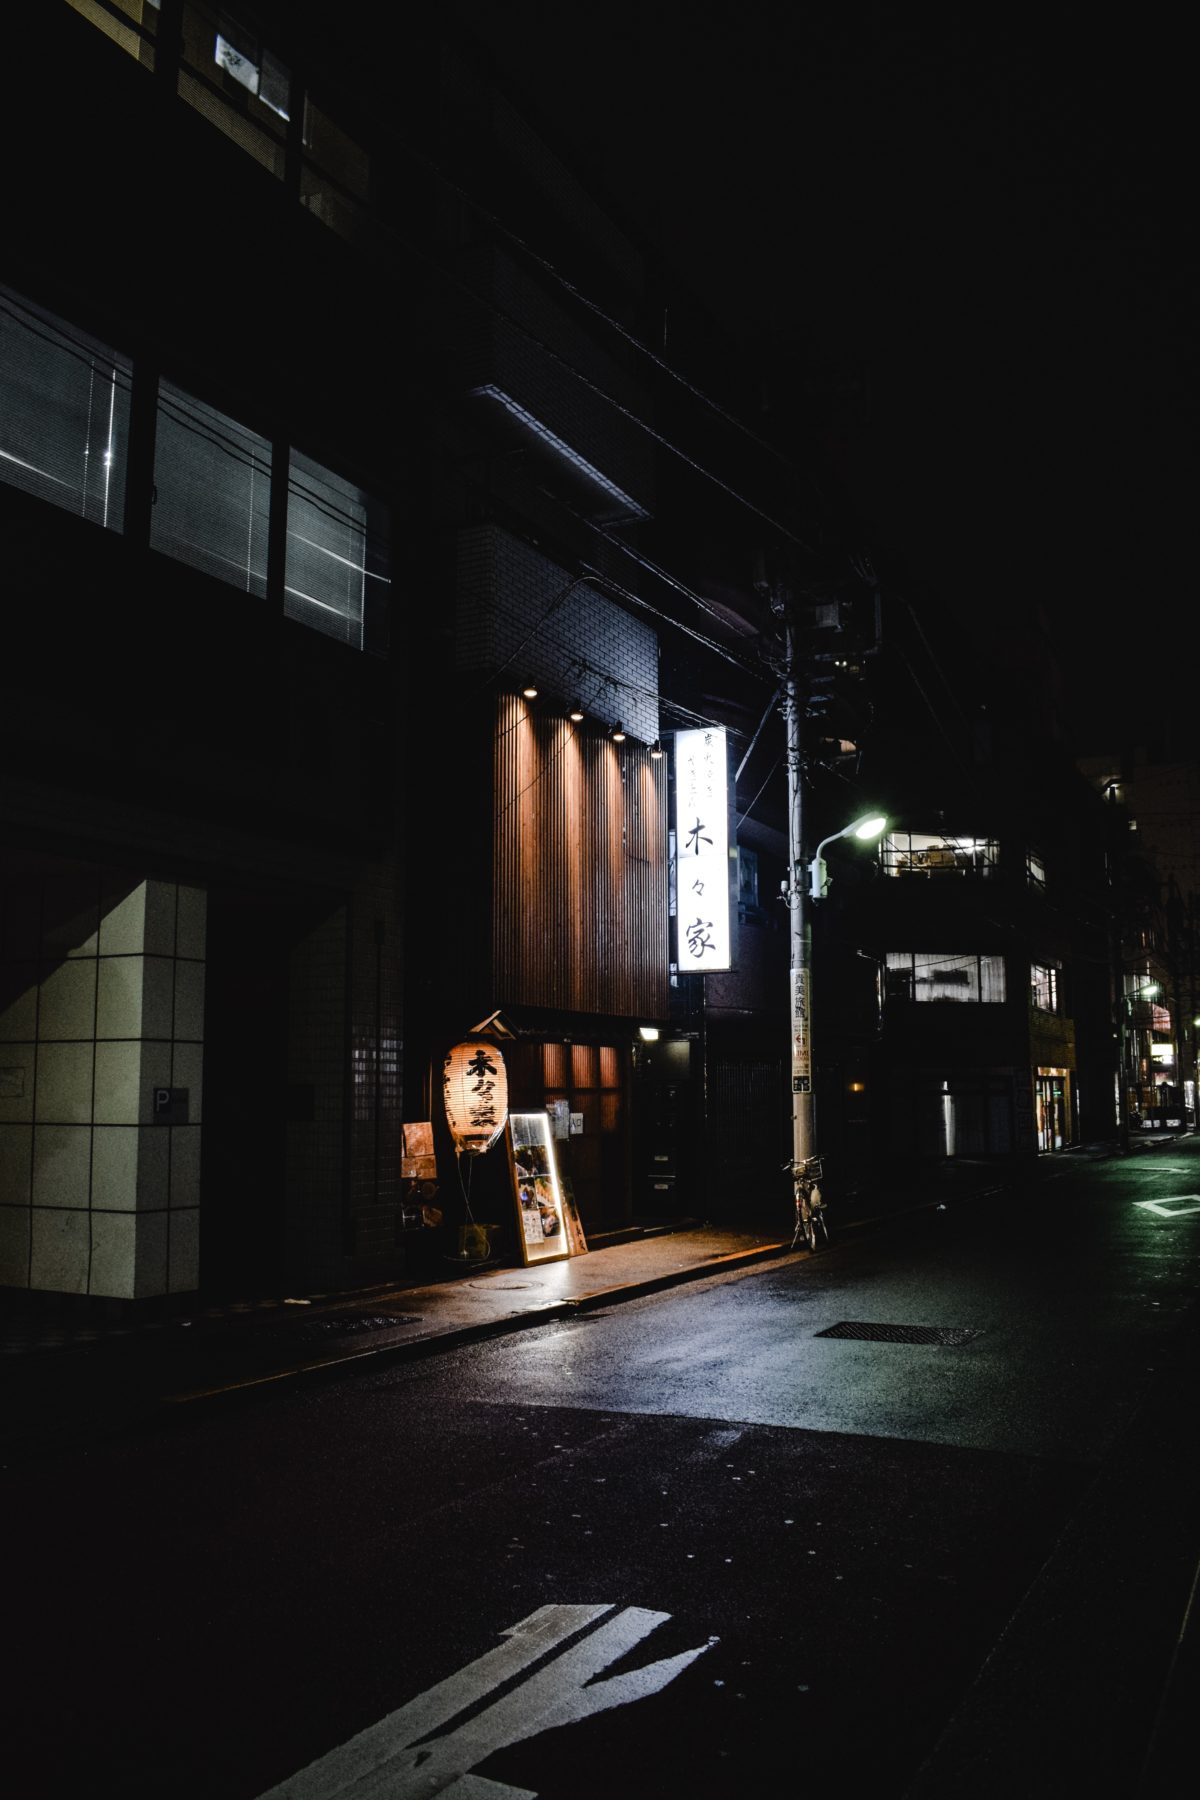 Dimly lit nighttime street scene.